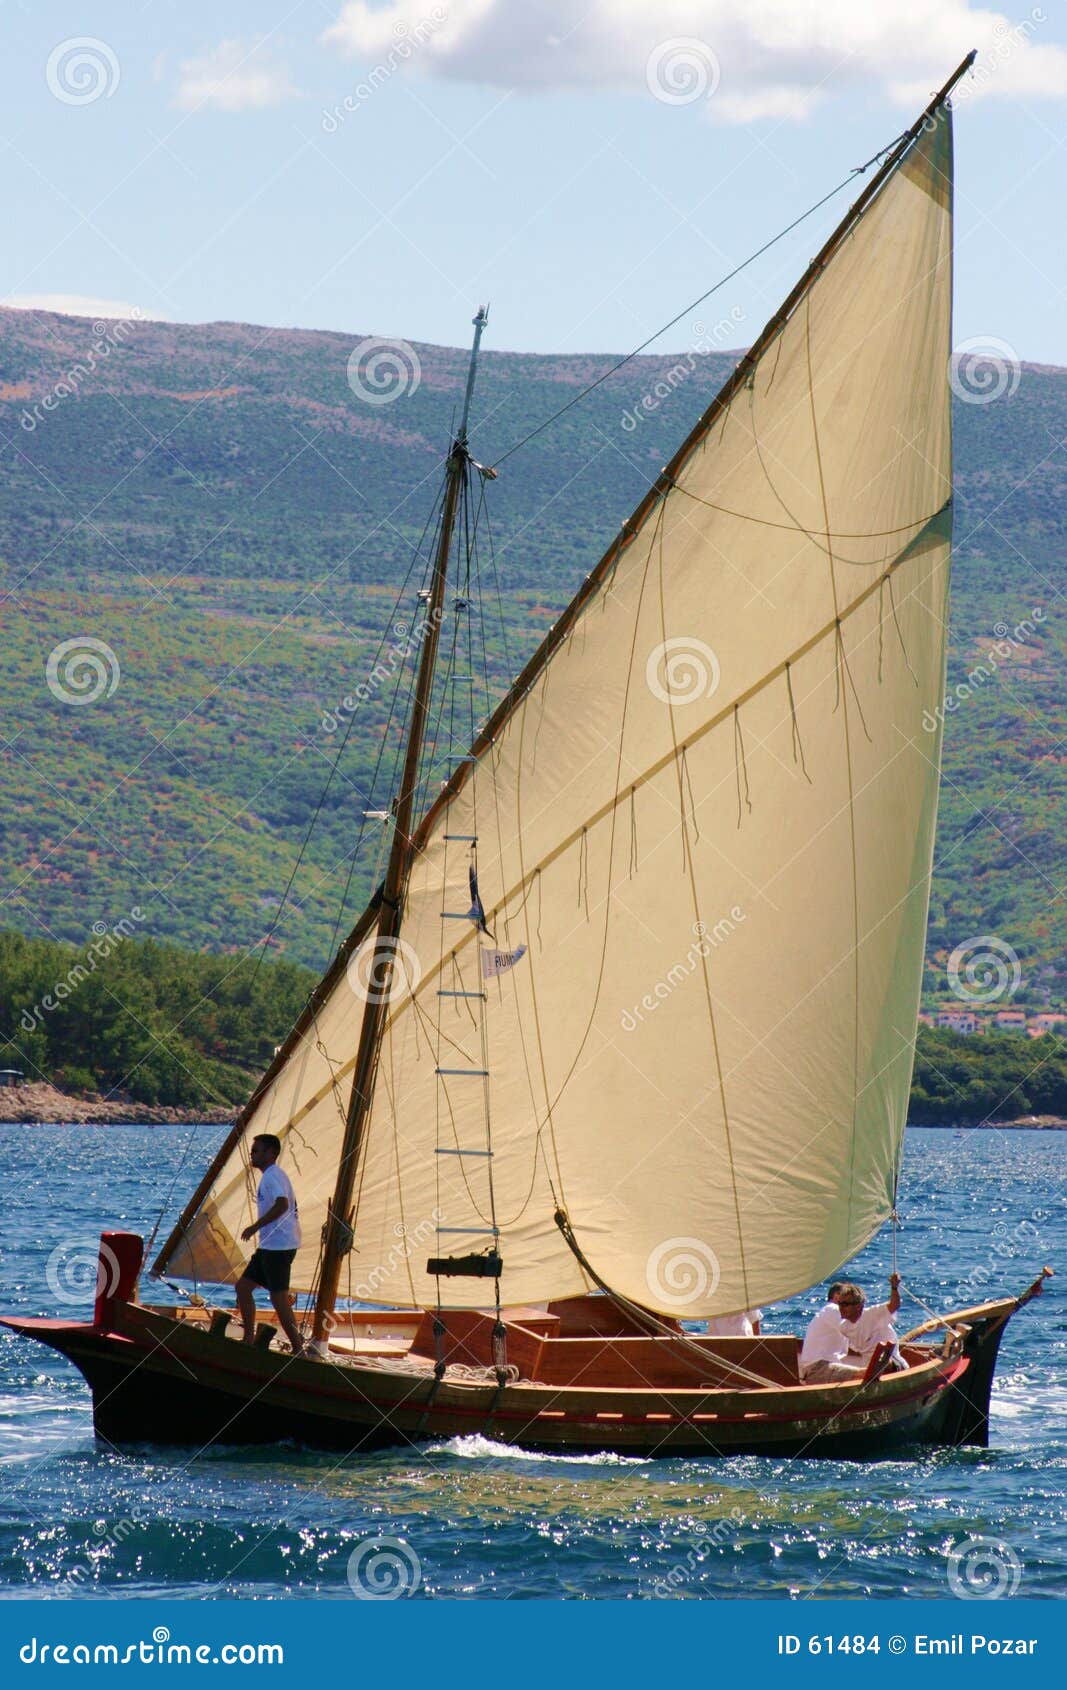 Vintage Sail Boat Stock Images - Image: 61484